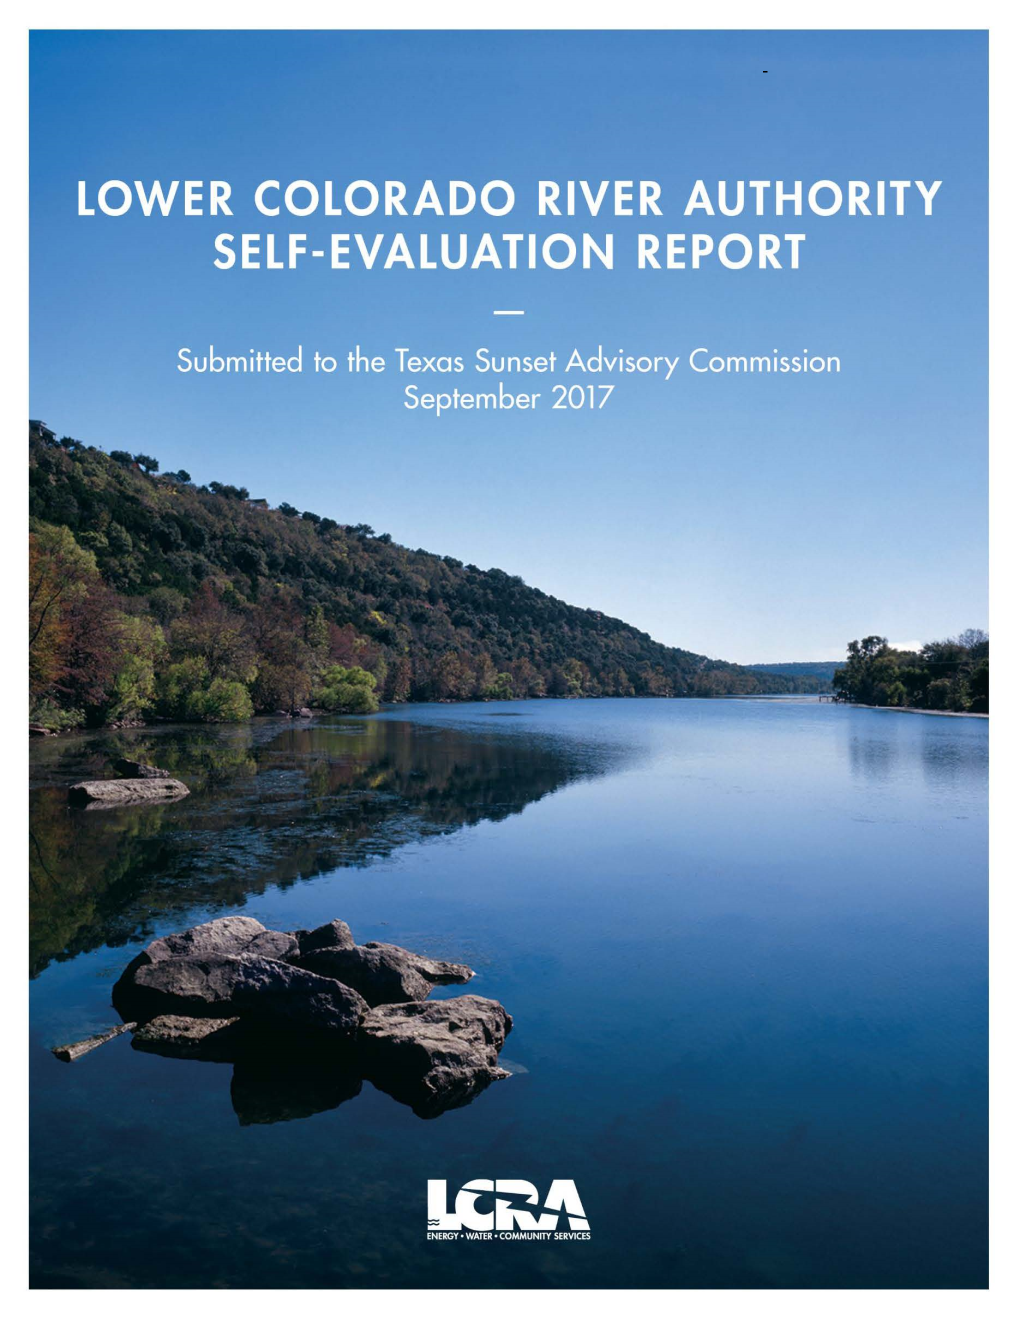 Lower Colorado River Authority Self-Evaluation Report